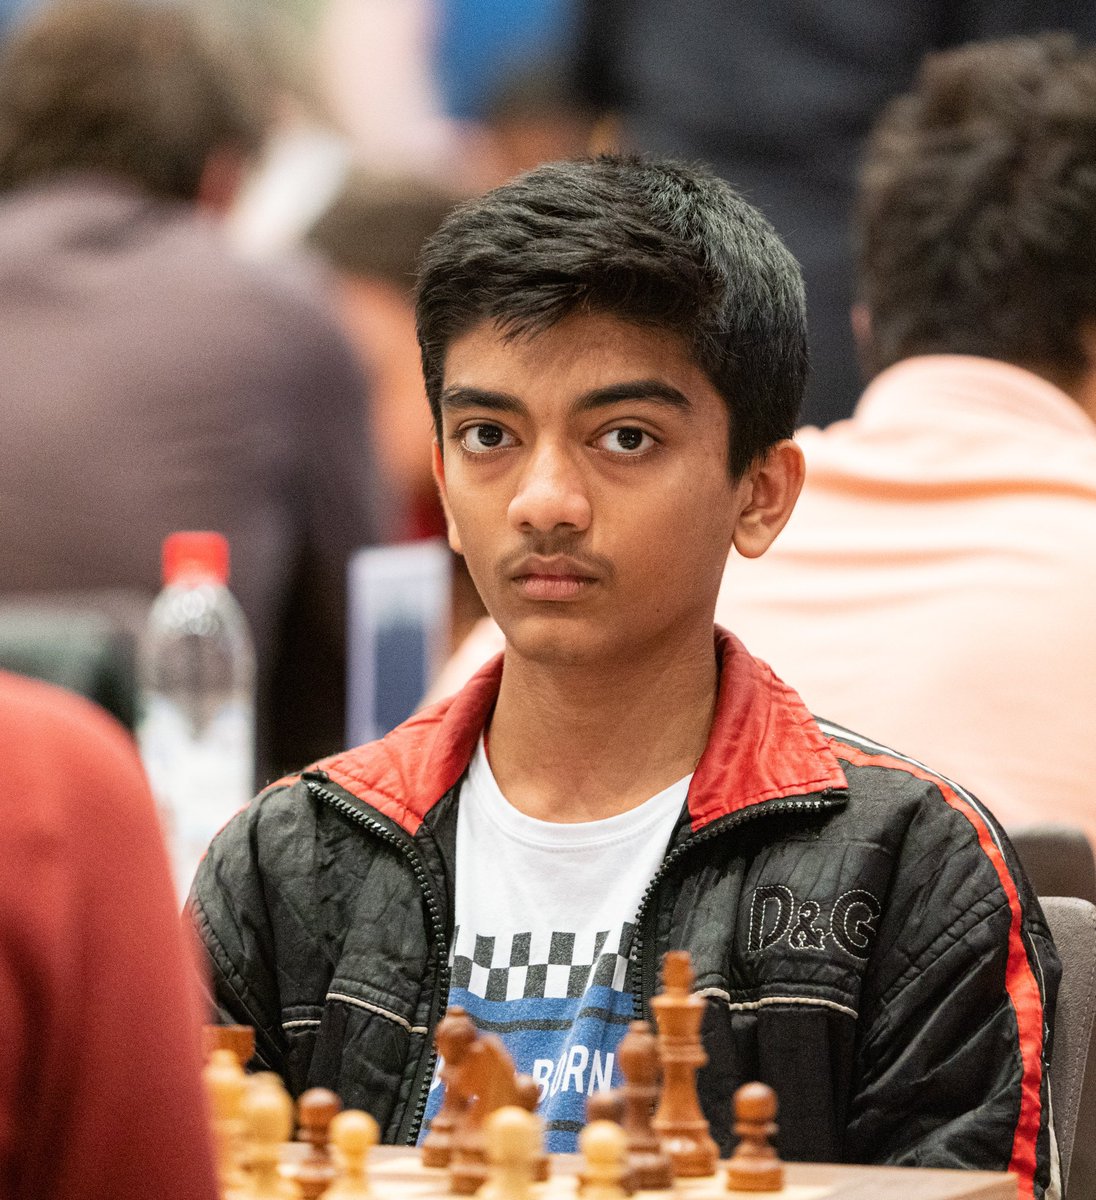 ChessBase India on X: BREAKING: @DGukesh crosses 2700 in the live